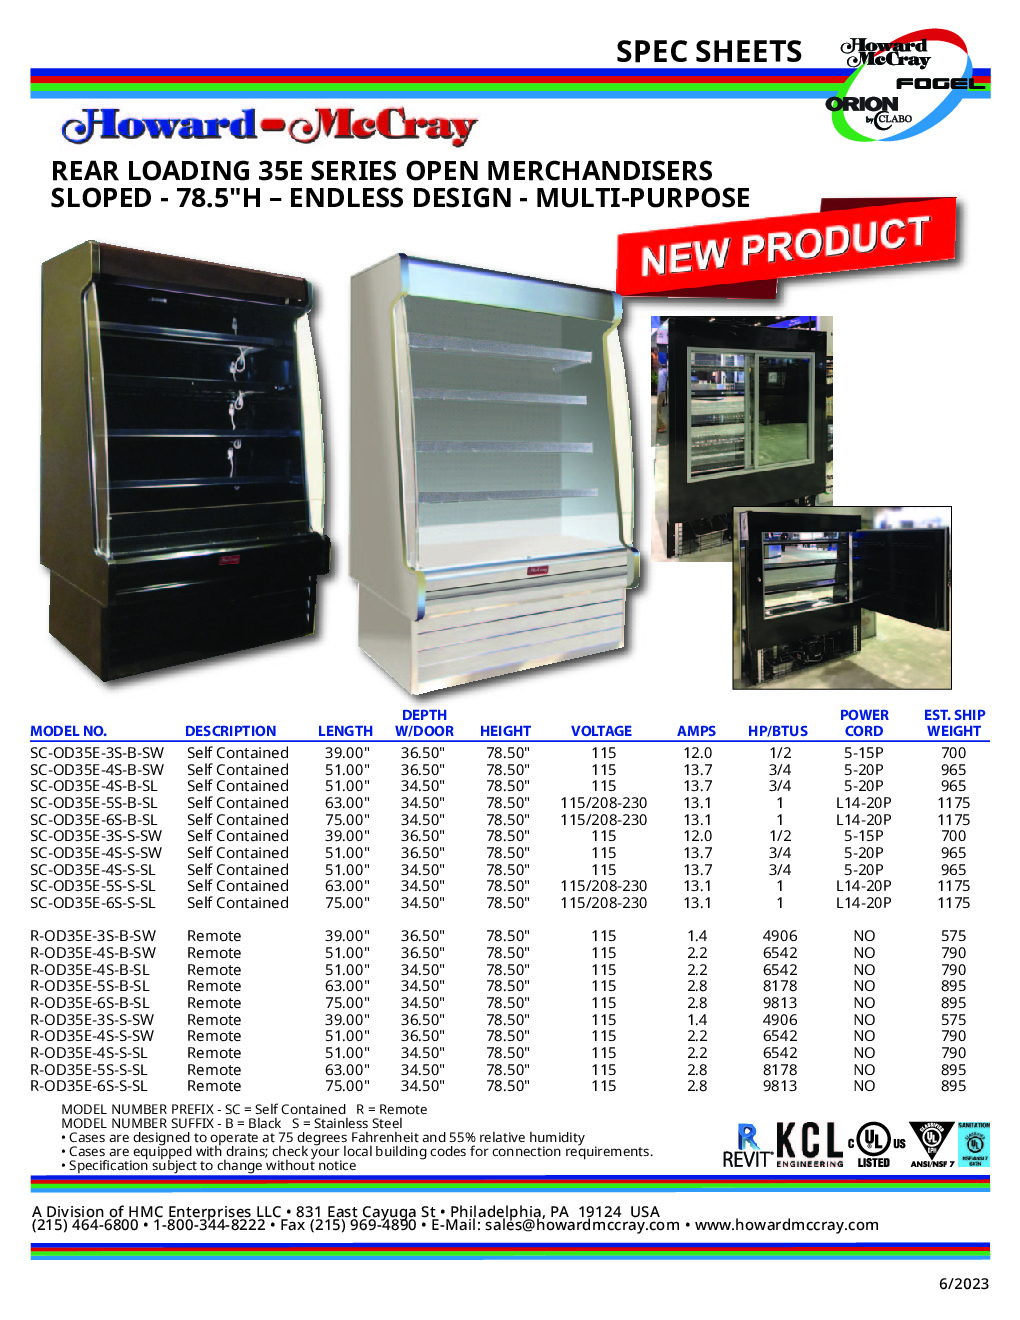 Howard-McCray R-OD35E-4S-B-SL Open Refrigerated Display Merchandiser